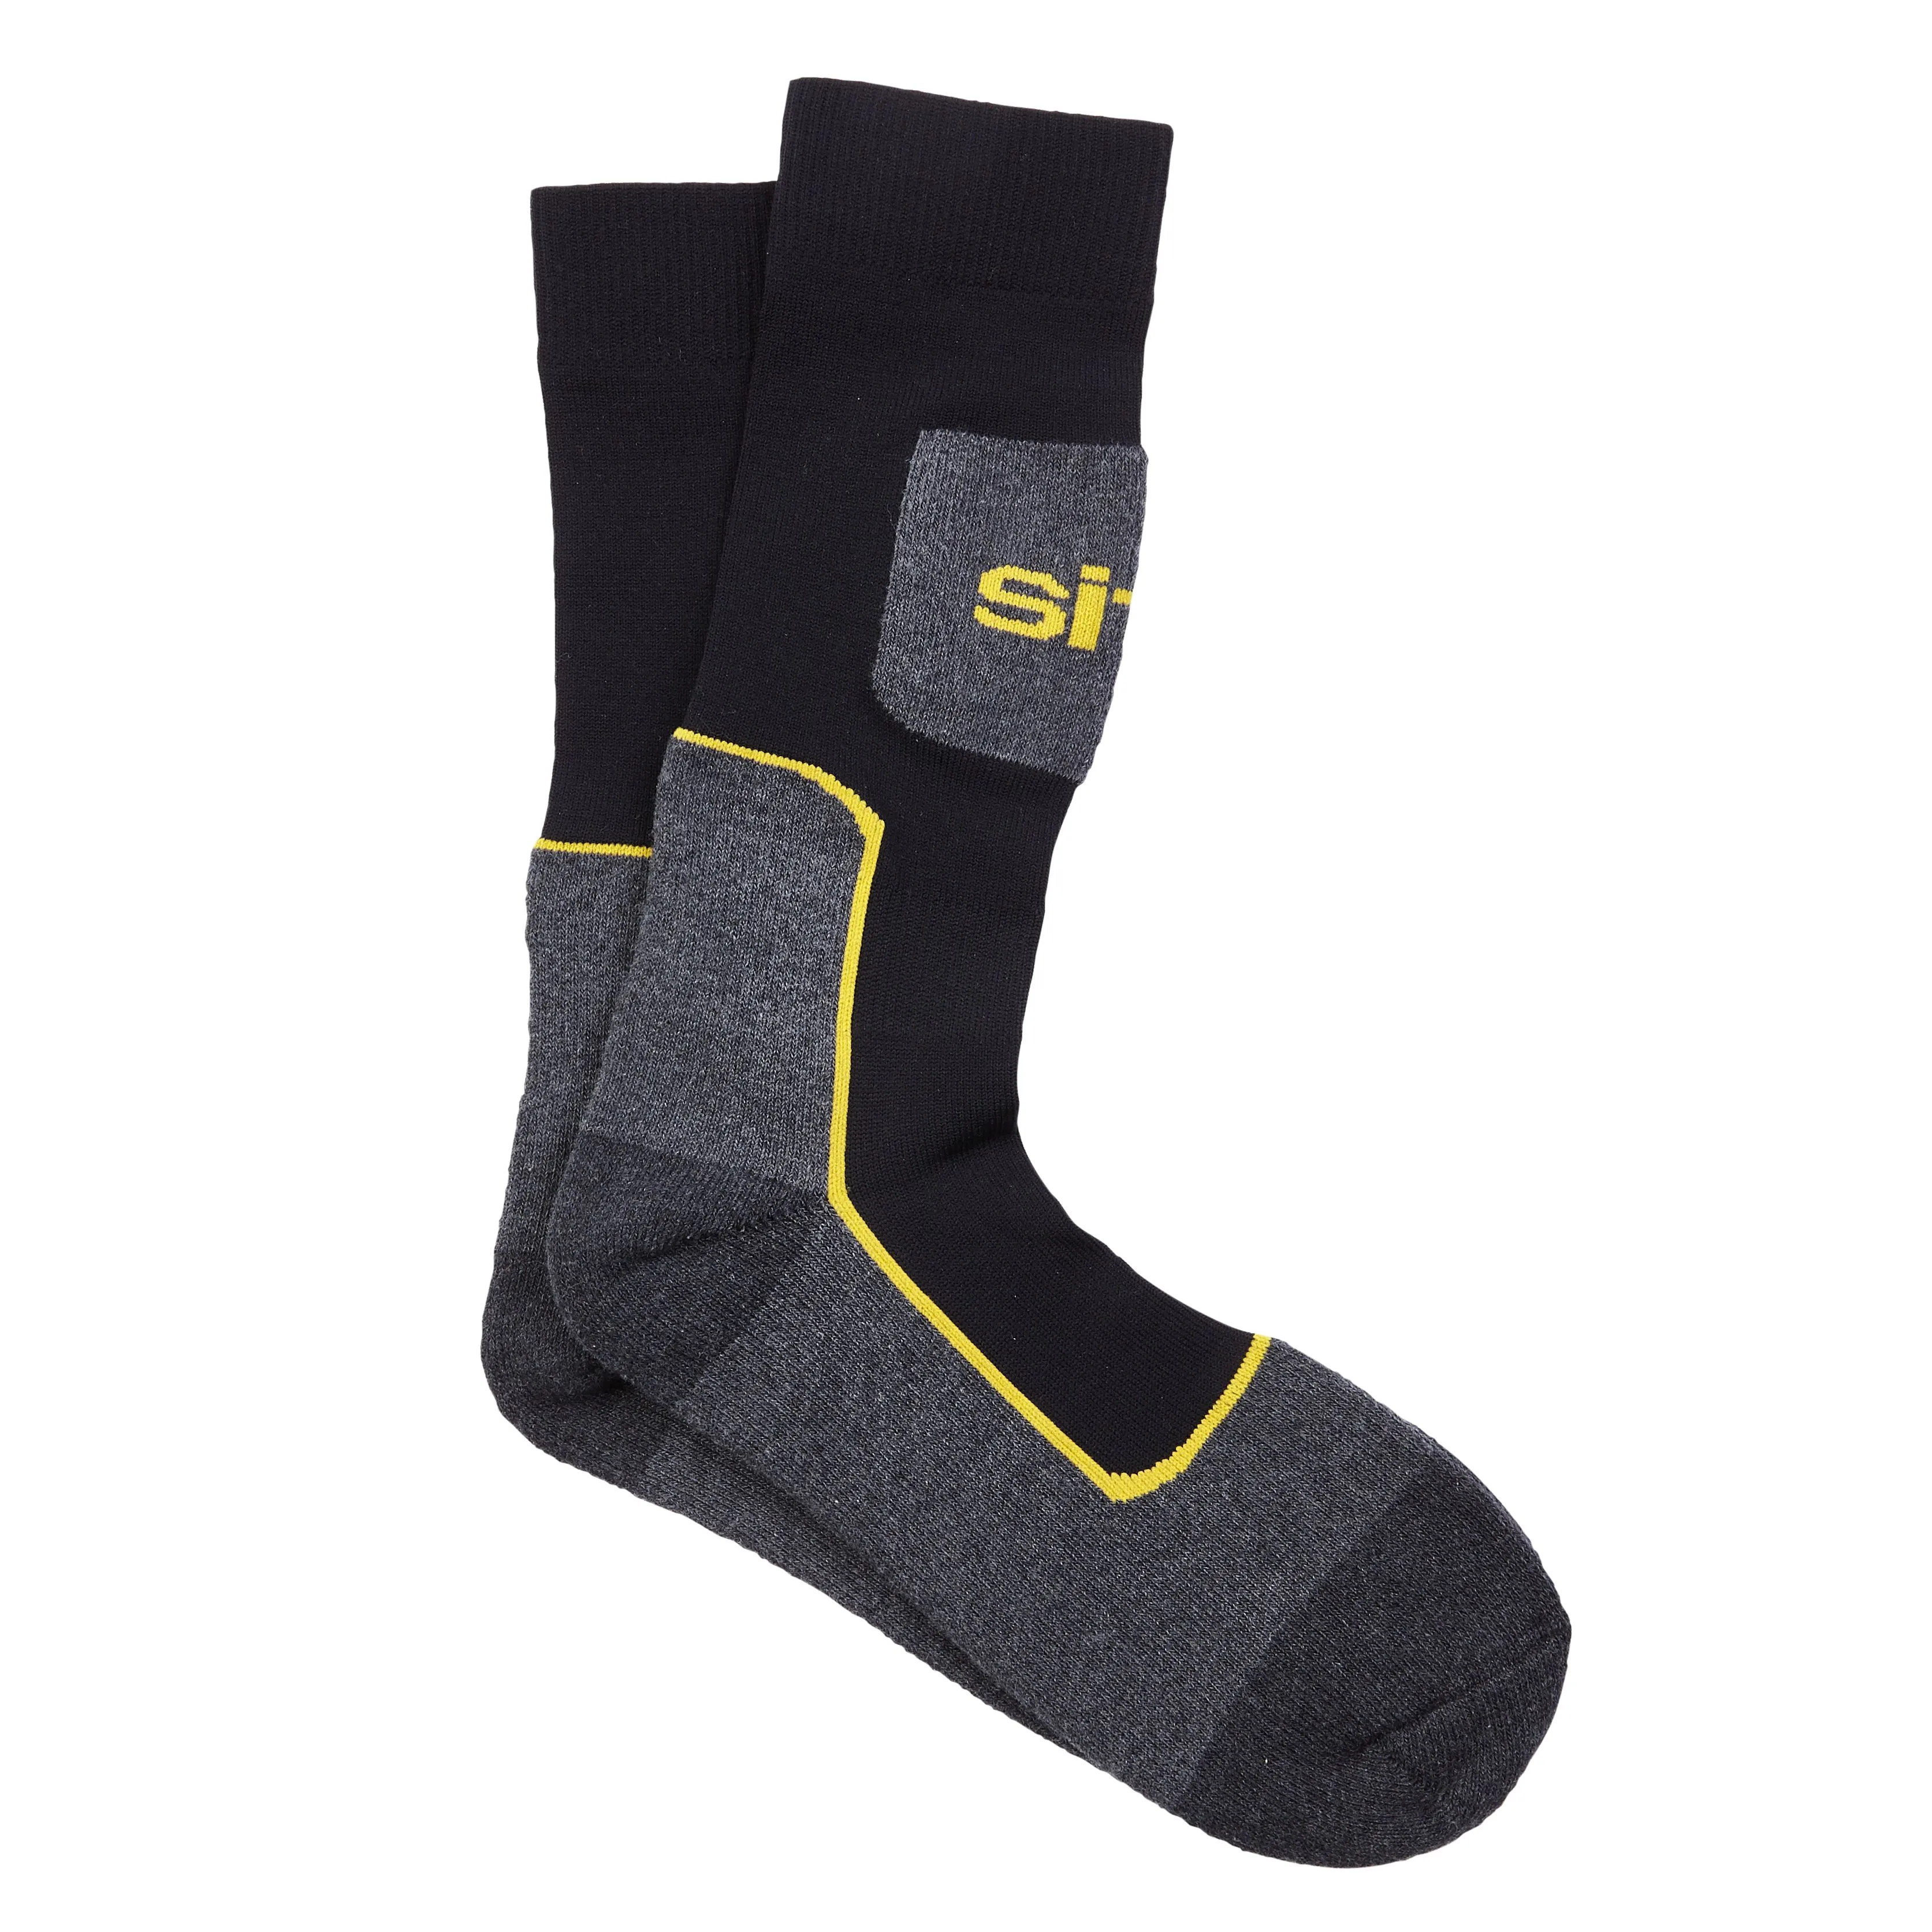 Site Black & grey Socks Size 7-11, 3 Pairs